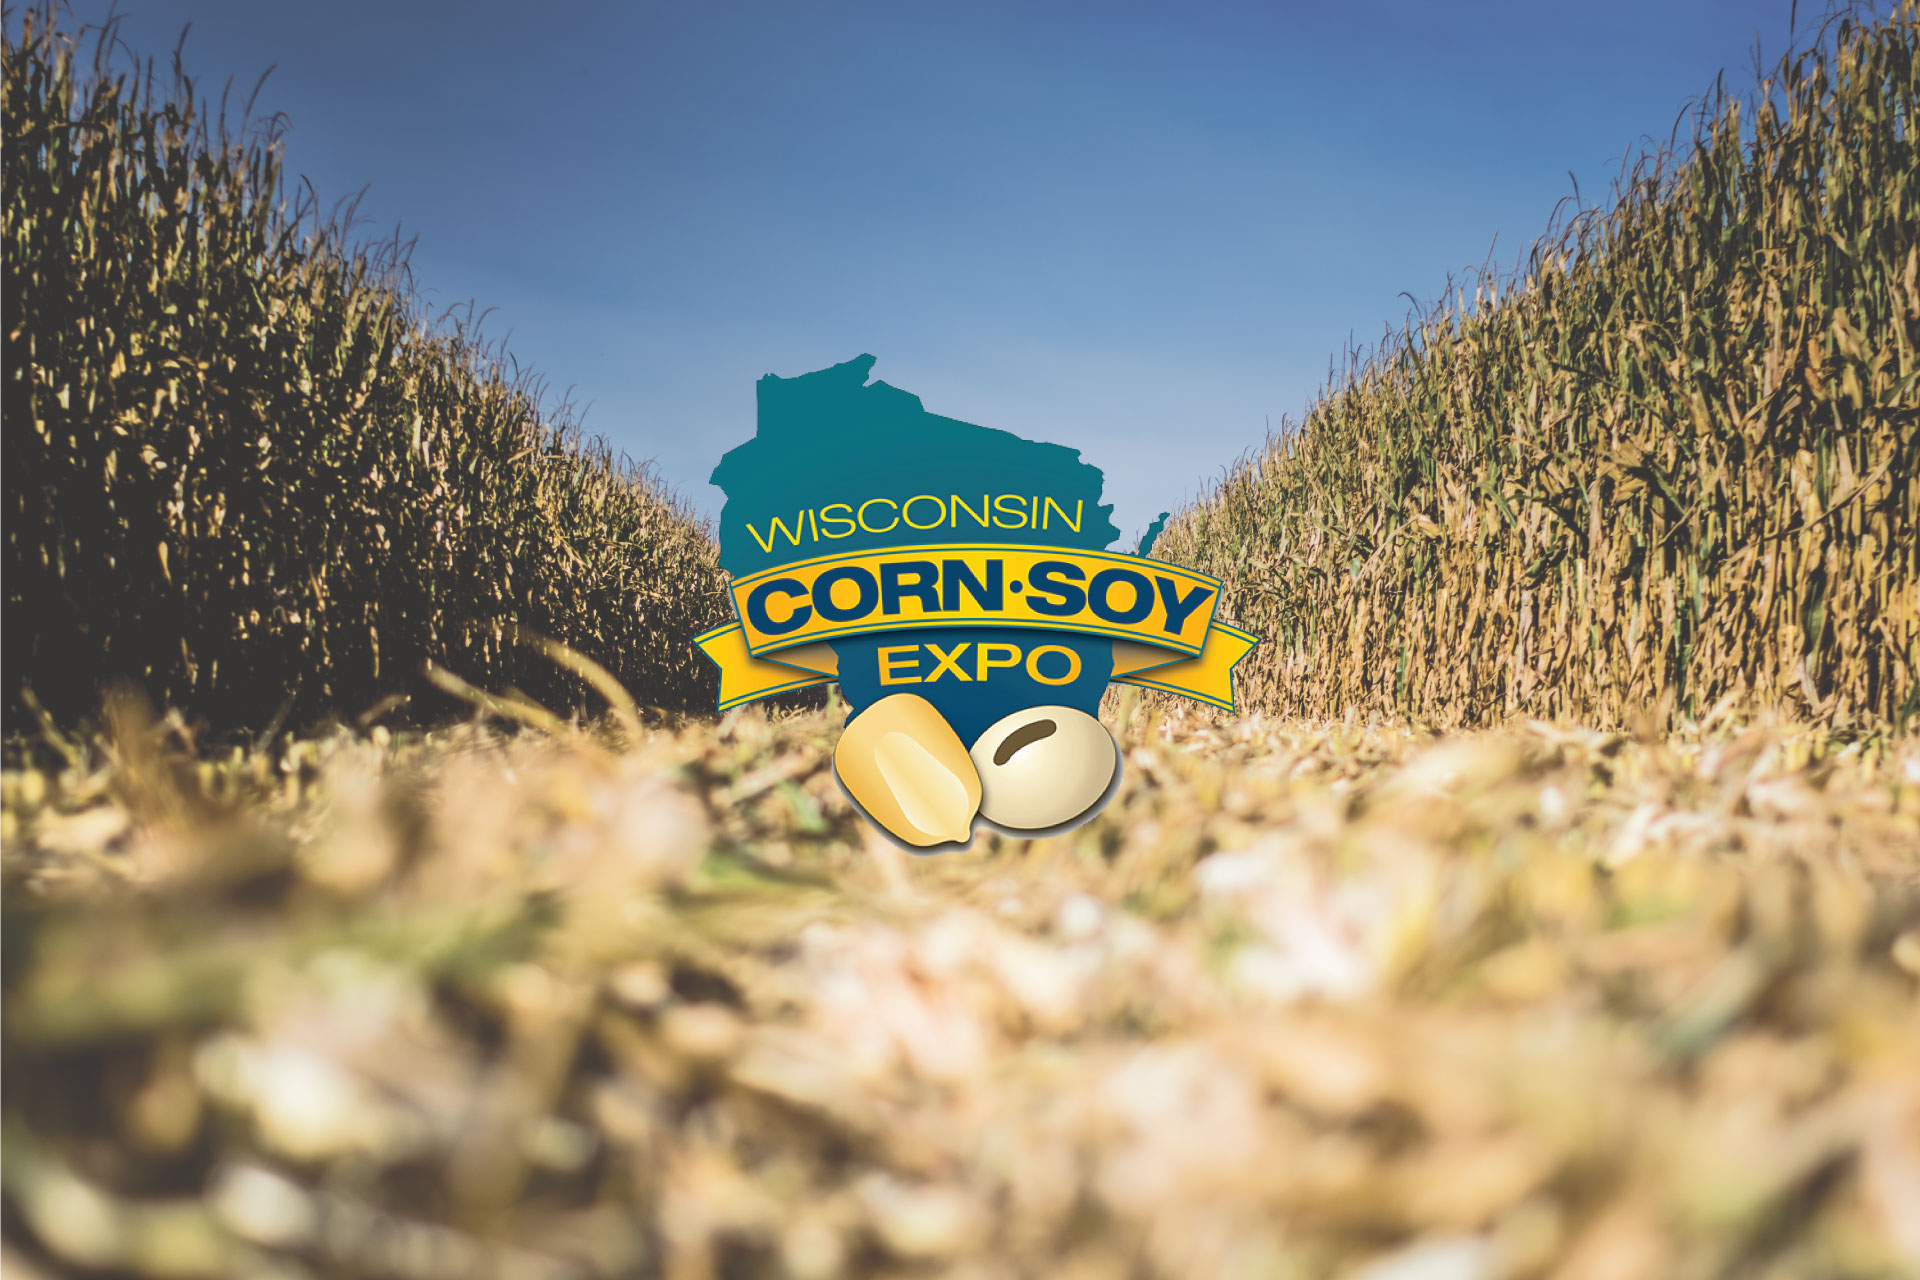 Wisconsin Corn-Soy Expo postponed until 2022